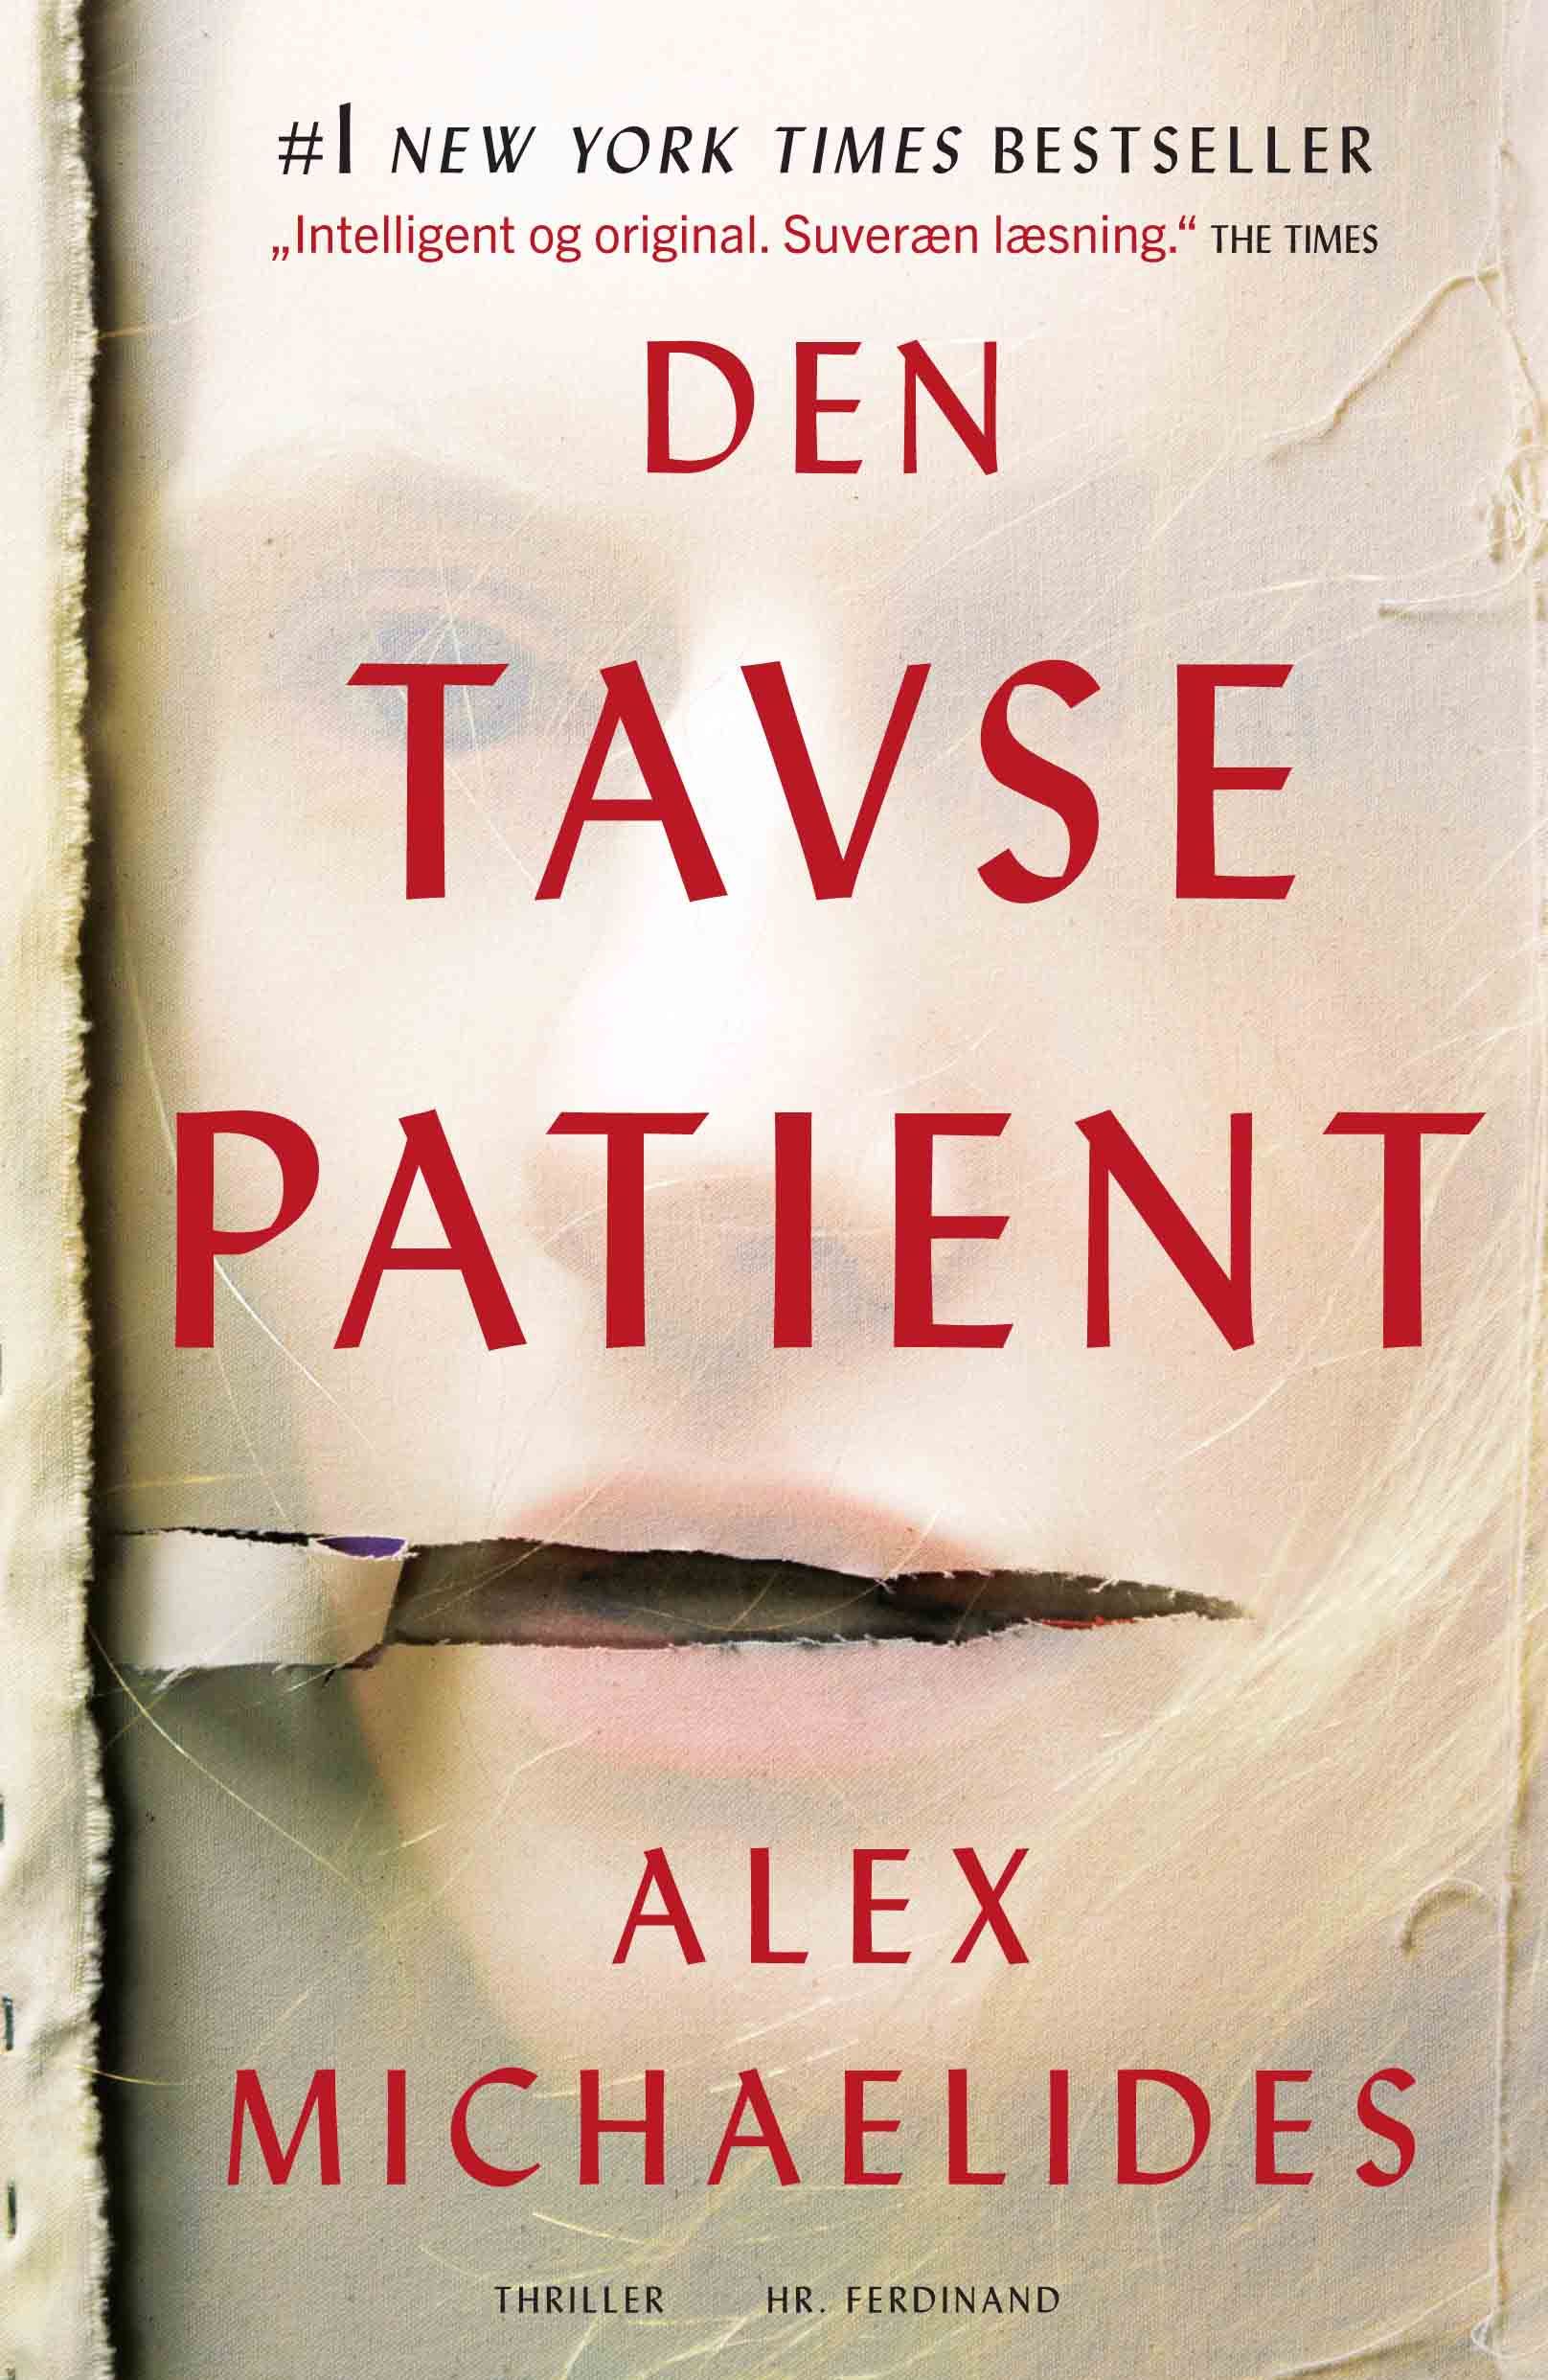 Den tavse patient, e-bok av Alex Michaelides